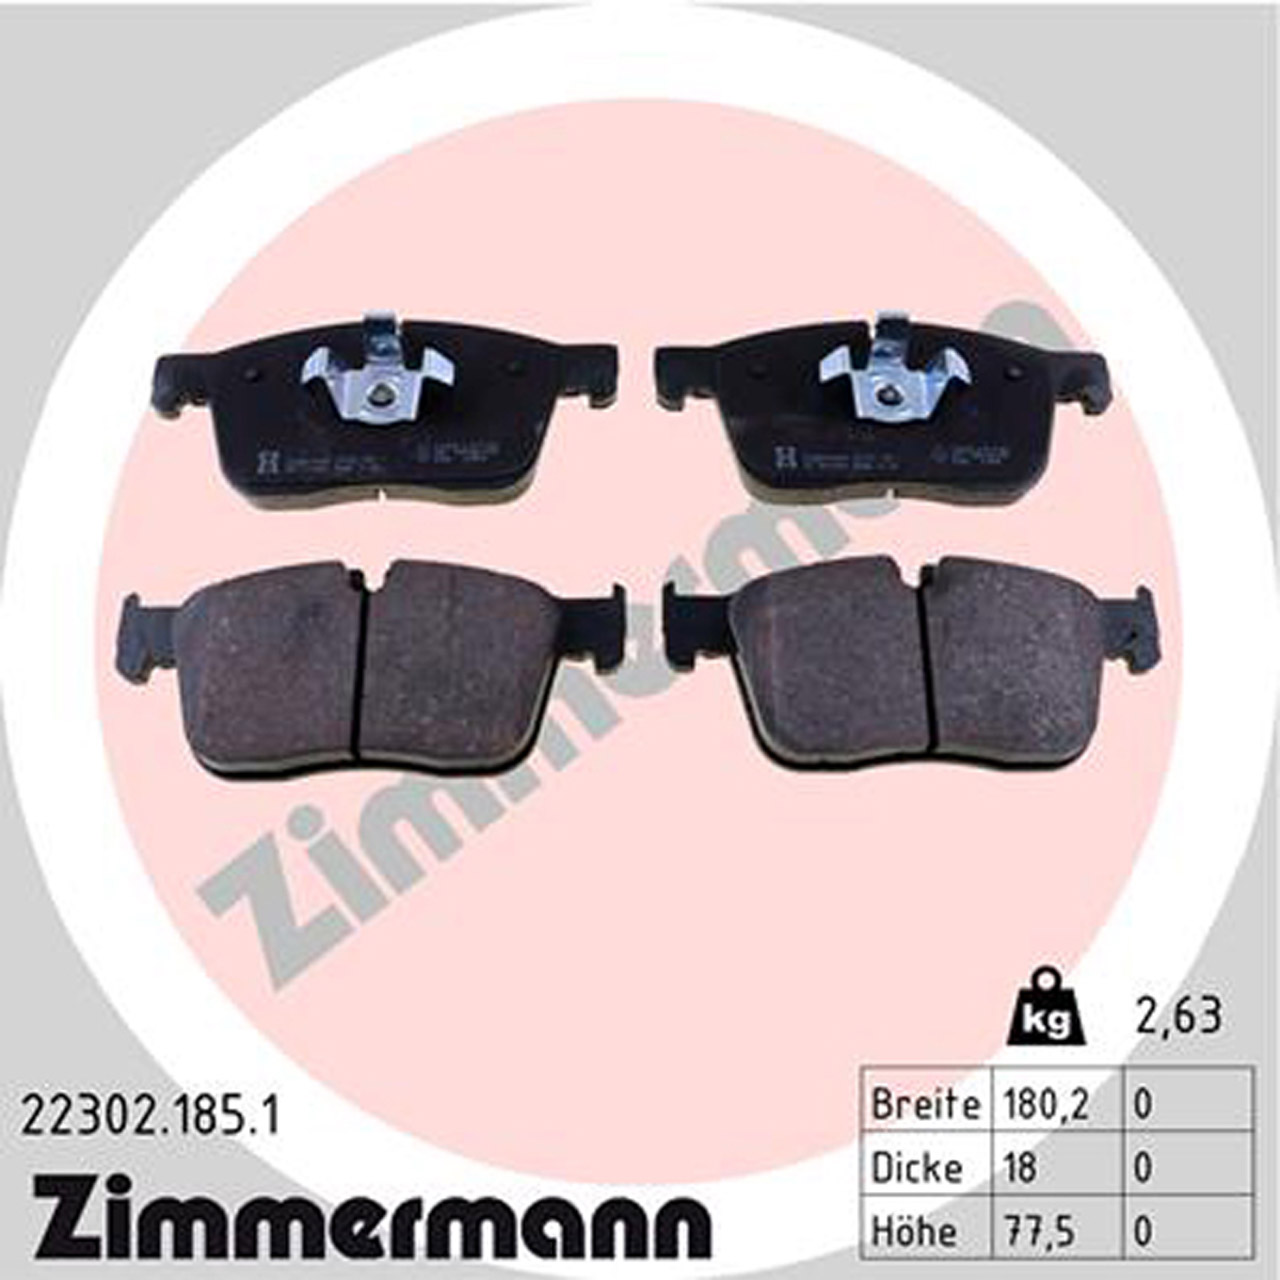 Zimmermann SPORT Bremsscheiben + Bremsbeläge + Sensor JAGUAR F-Pace (X761) 18 Zoll vorne